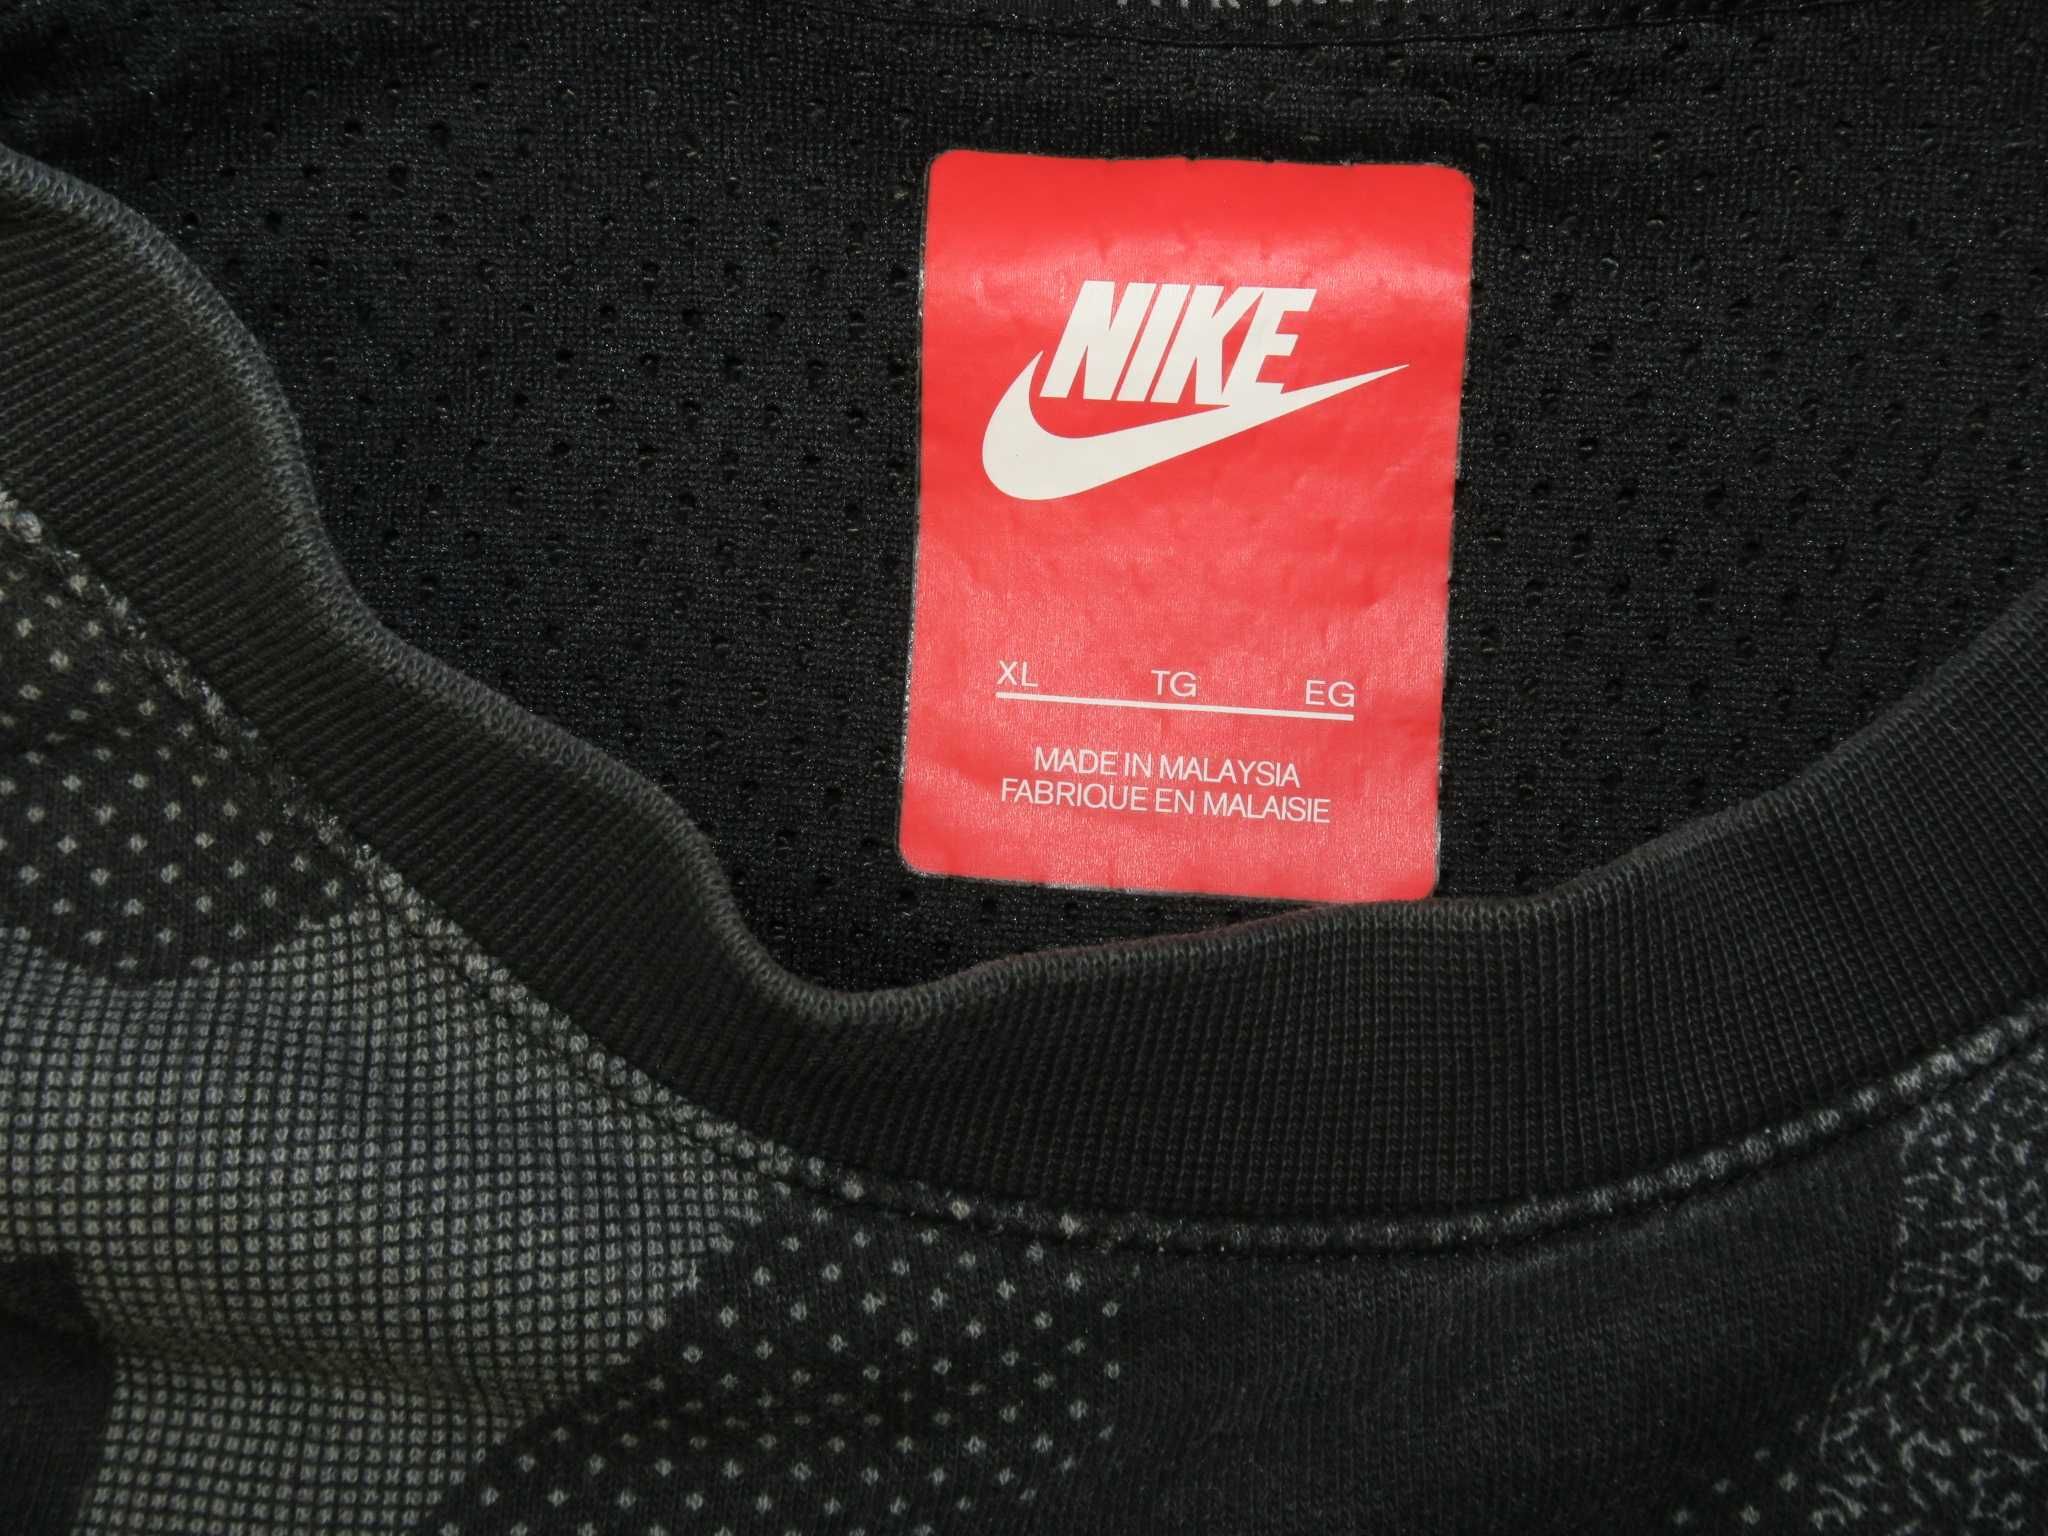 Nike Air Max bluza crewneck XL